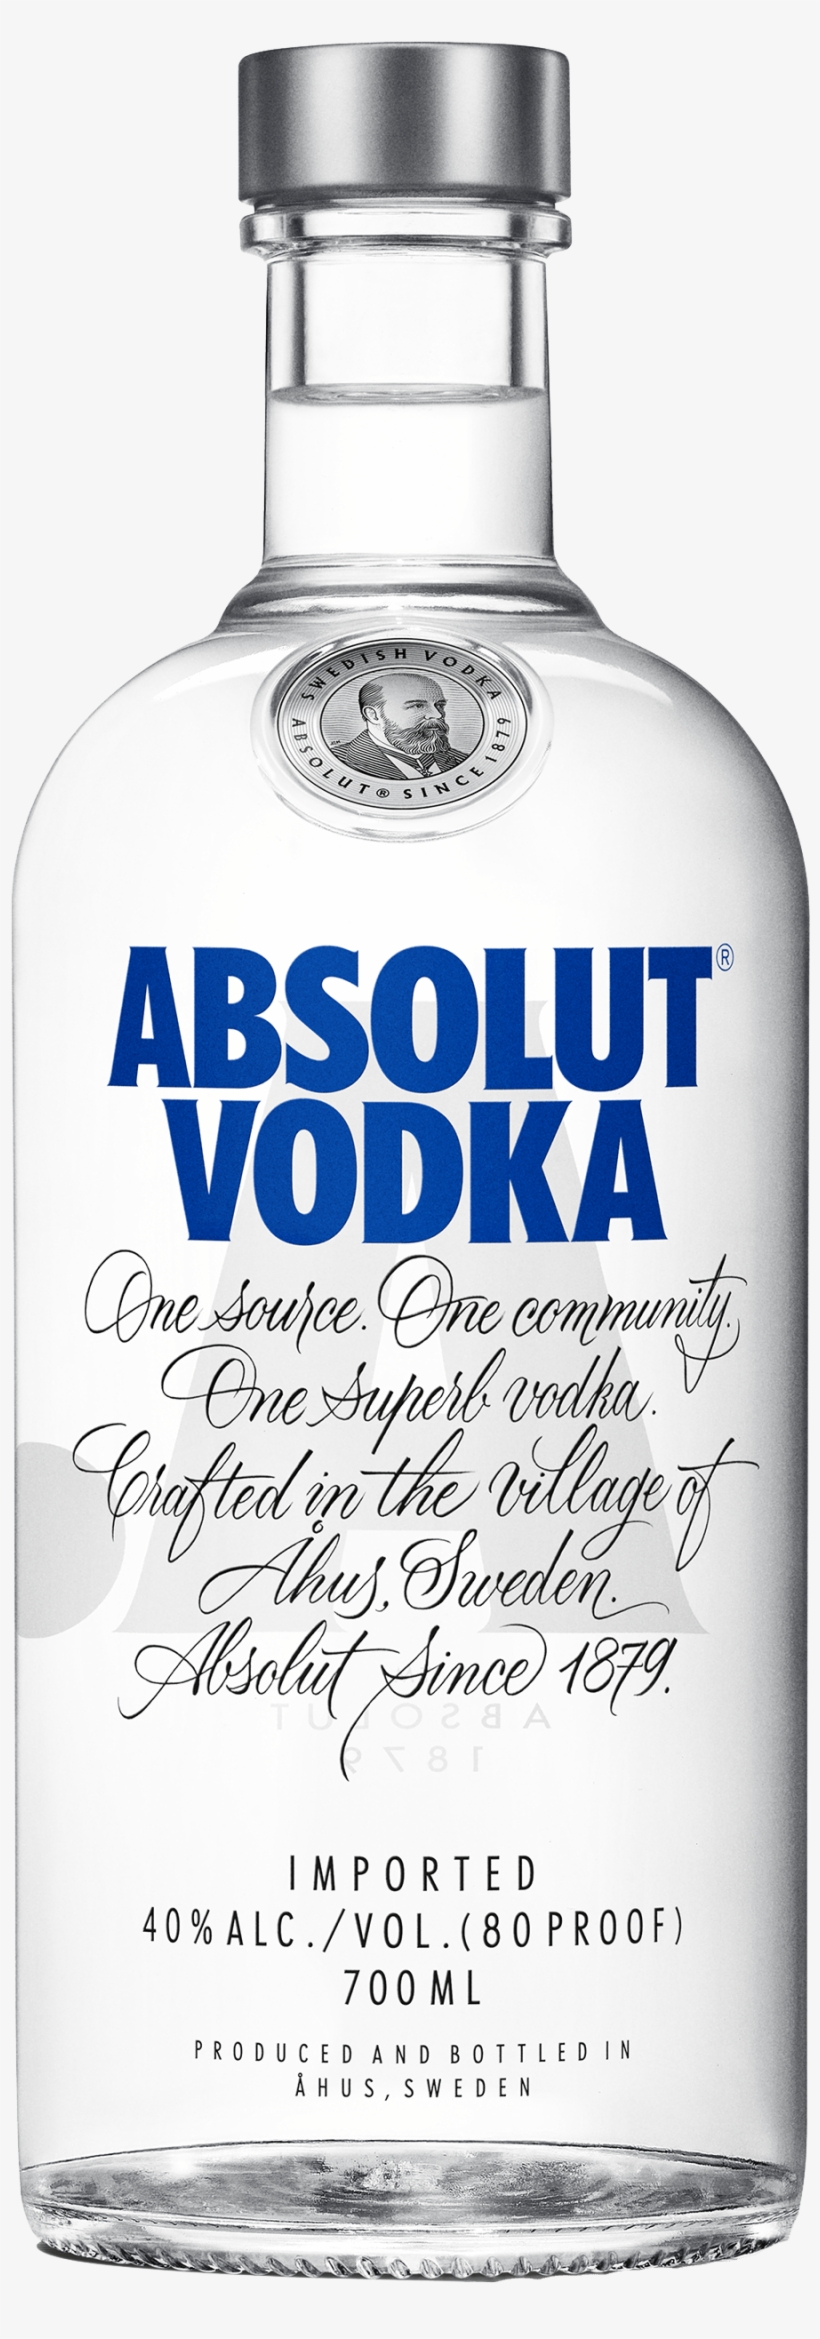 Vodka 700ml - Absolut Vodka, transparent png #2860997